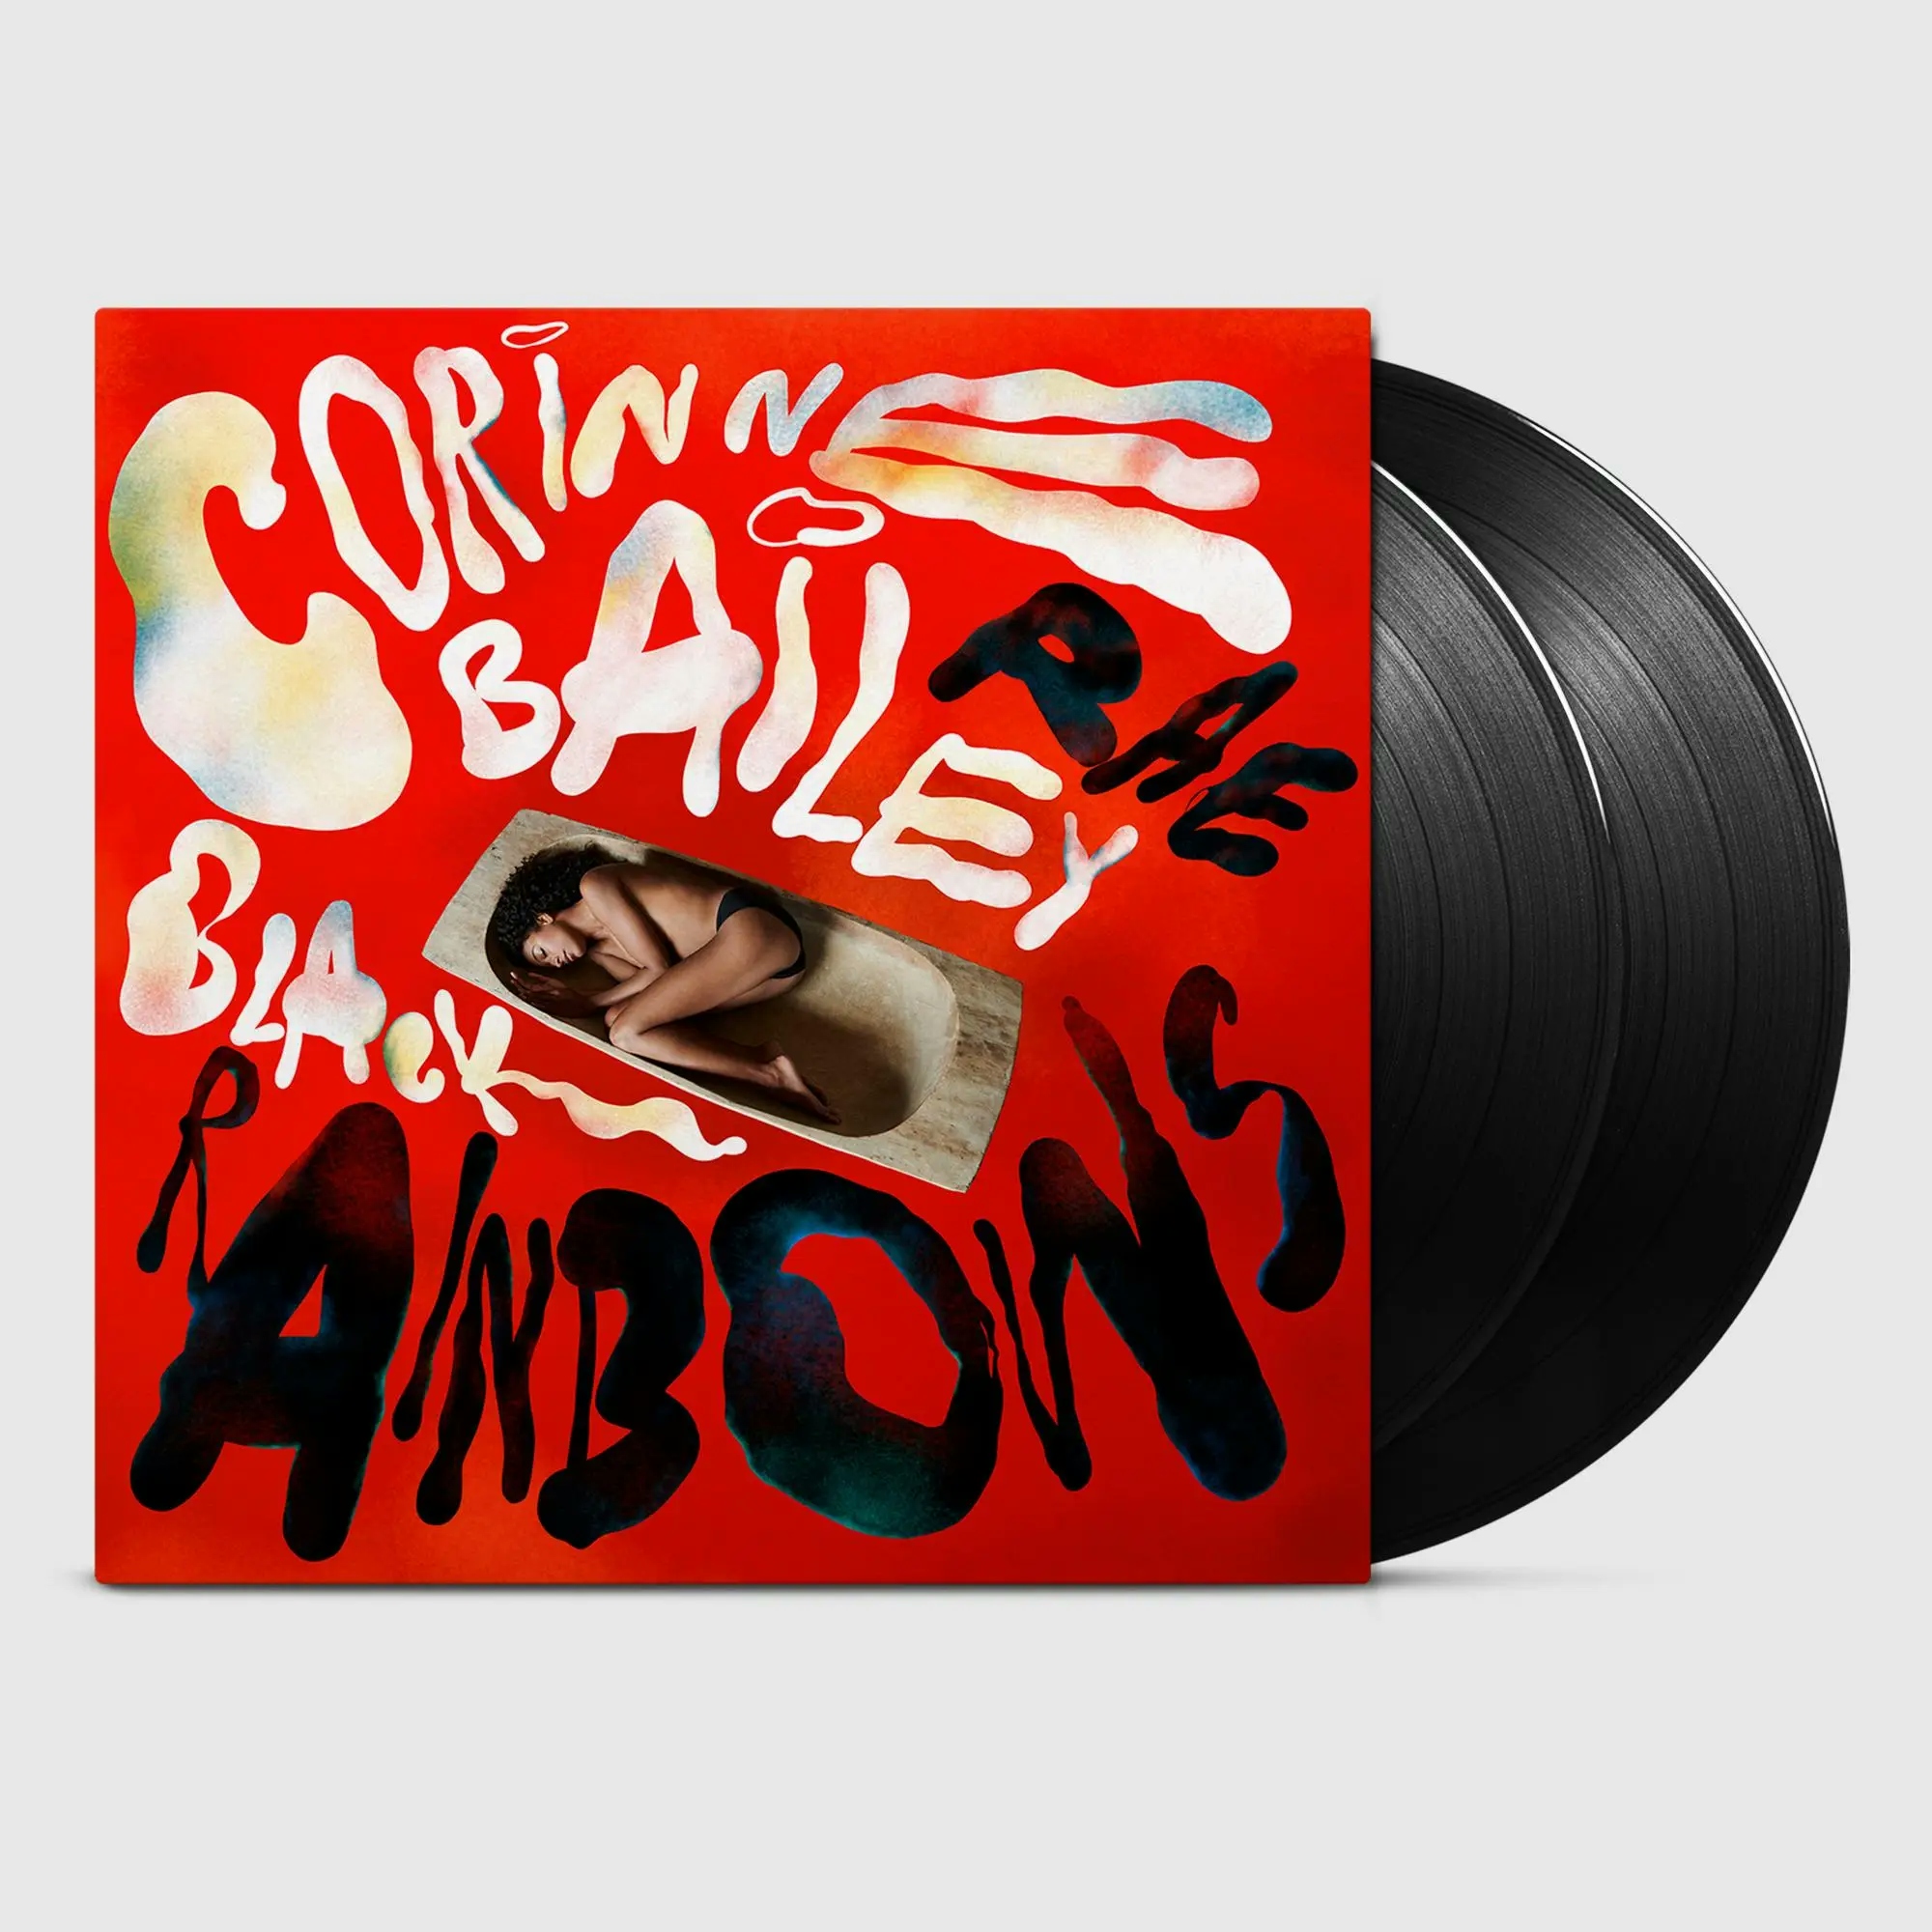 Album artwork for Album artwork for Black Rainbows by Corinne Bailey Rae by Black Rainbows - Corinne Bailey Rae